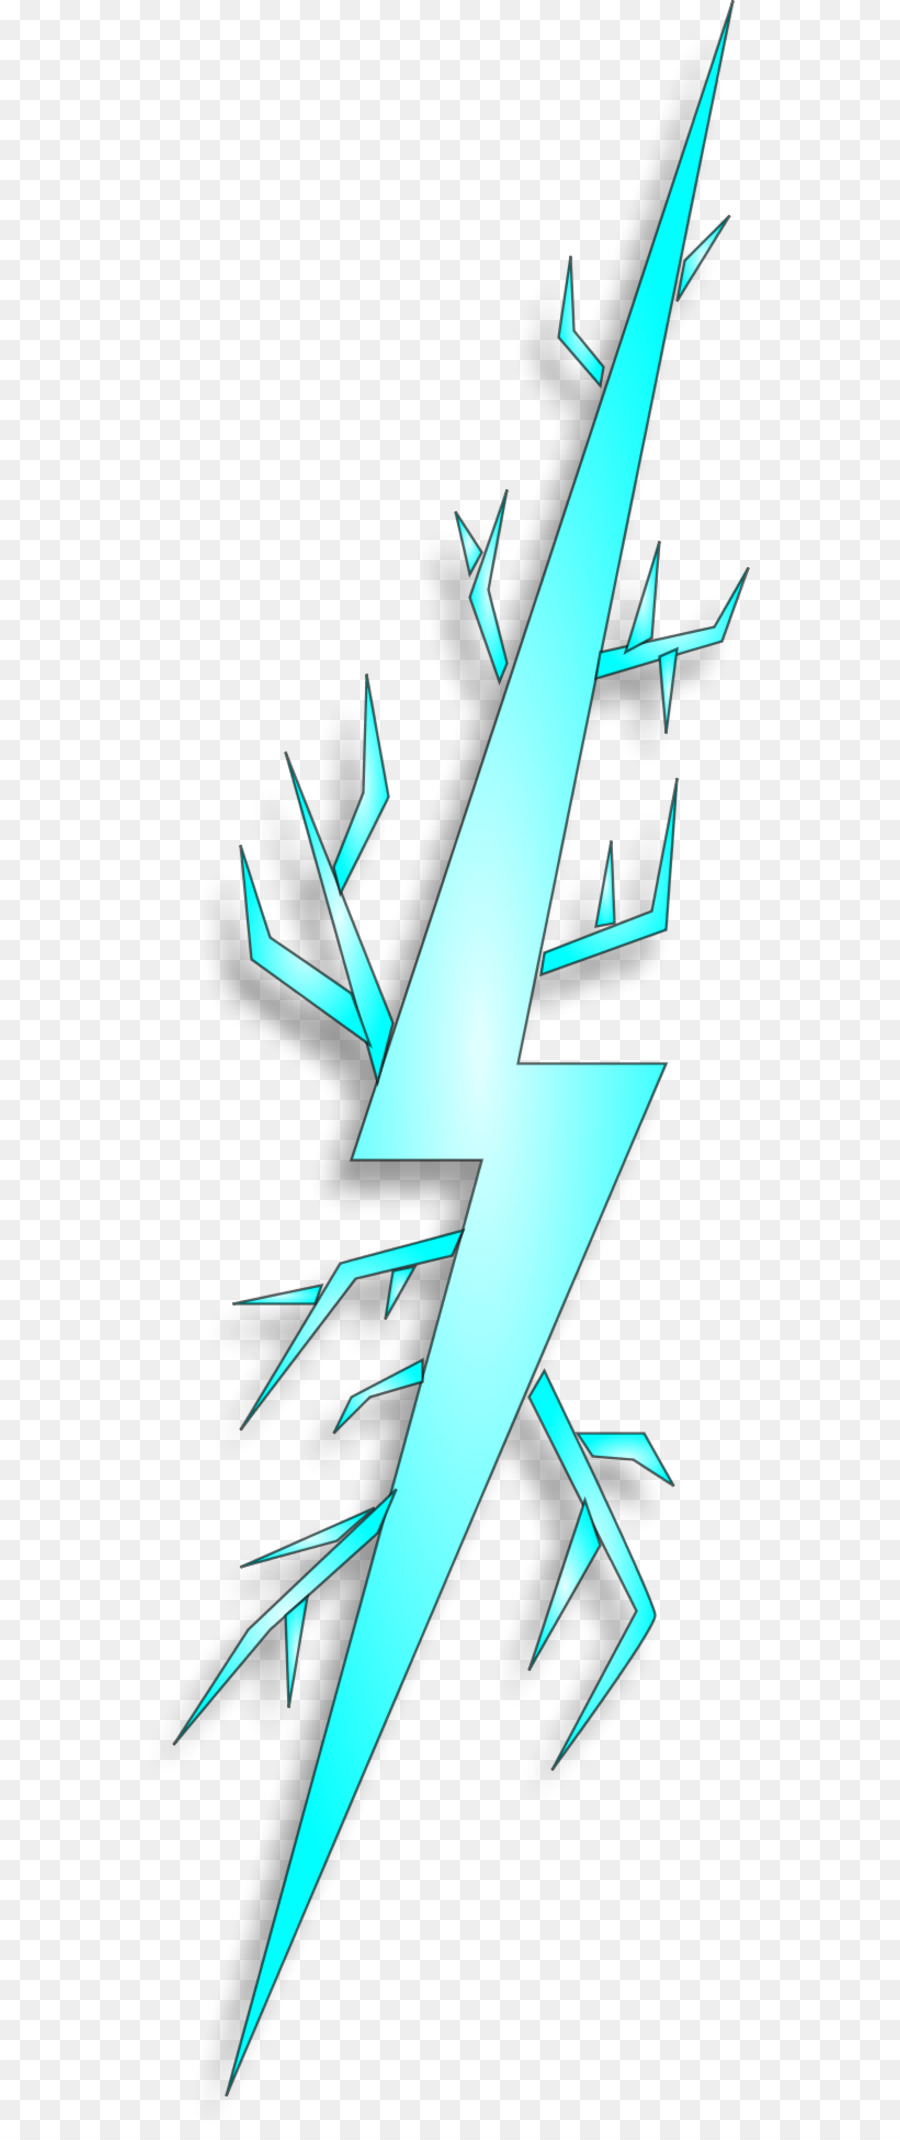 Lightning Bolt Background clipart